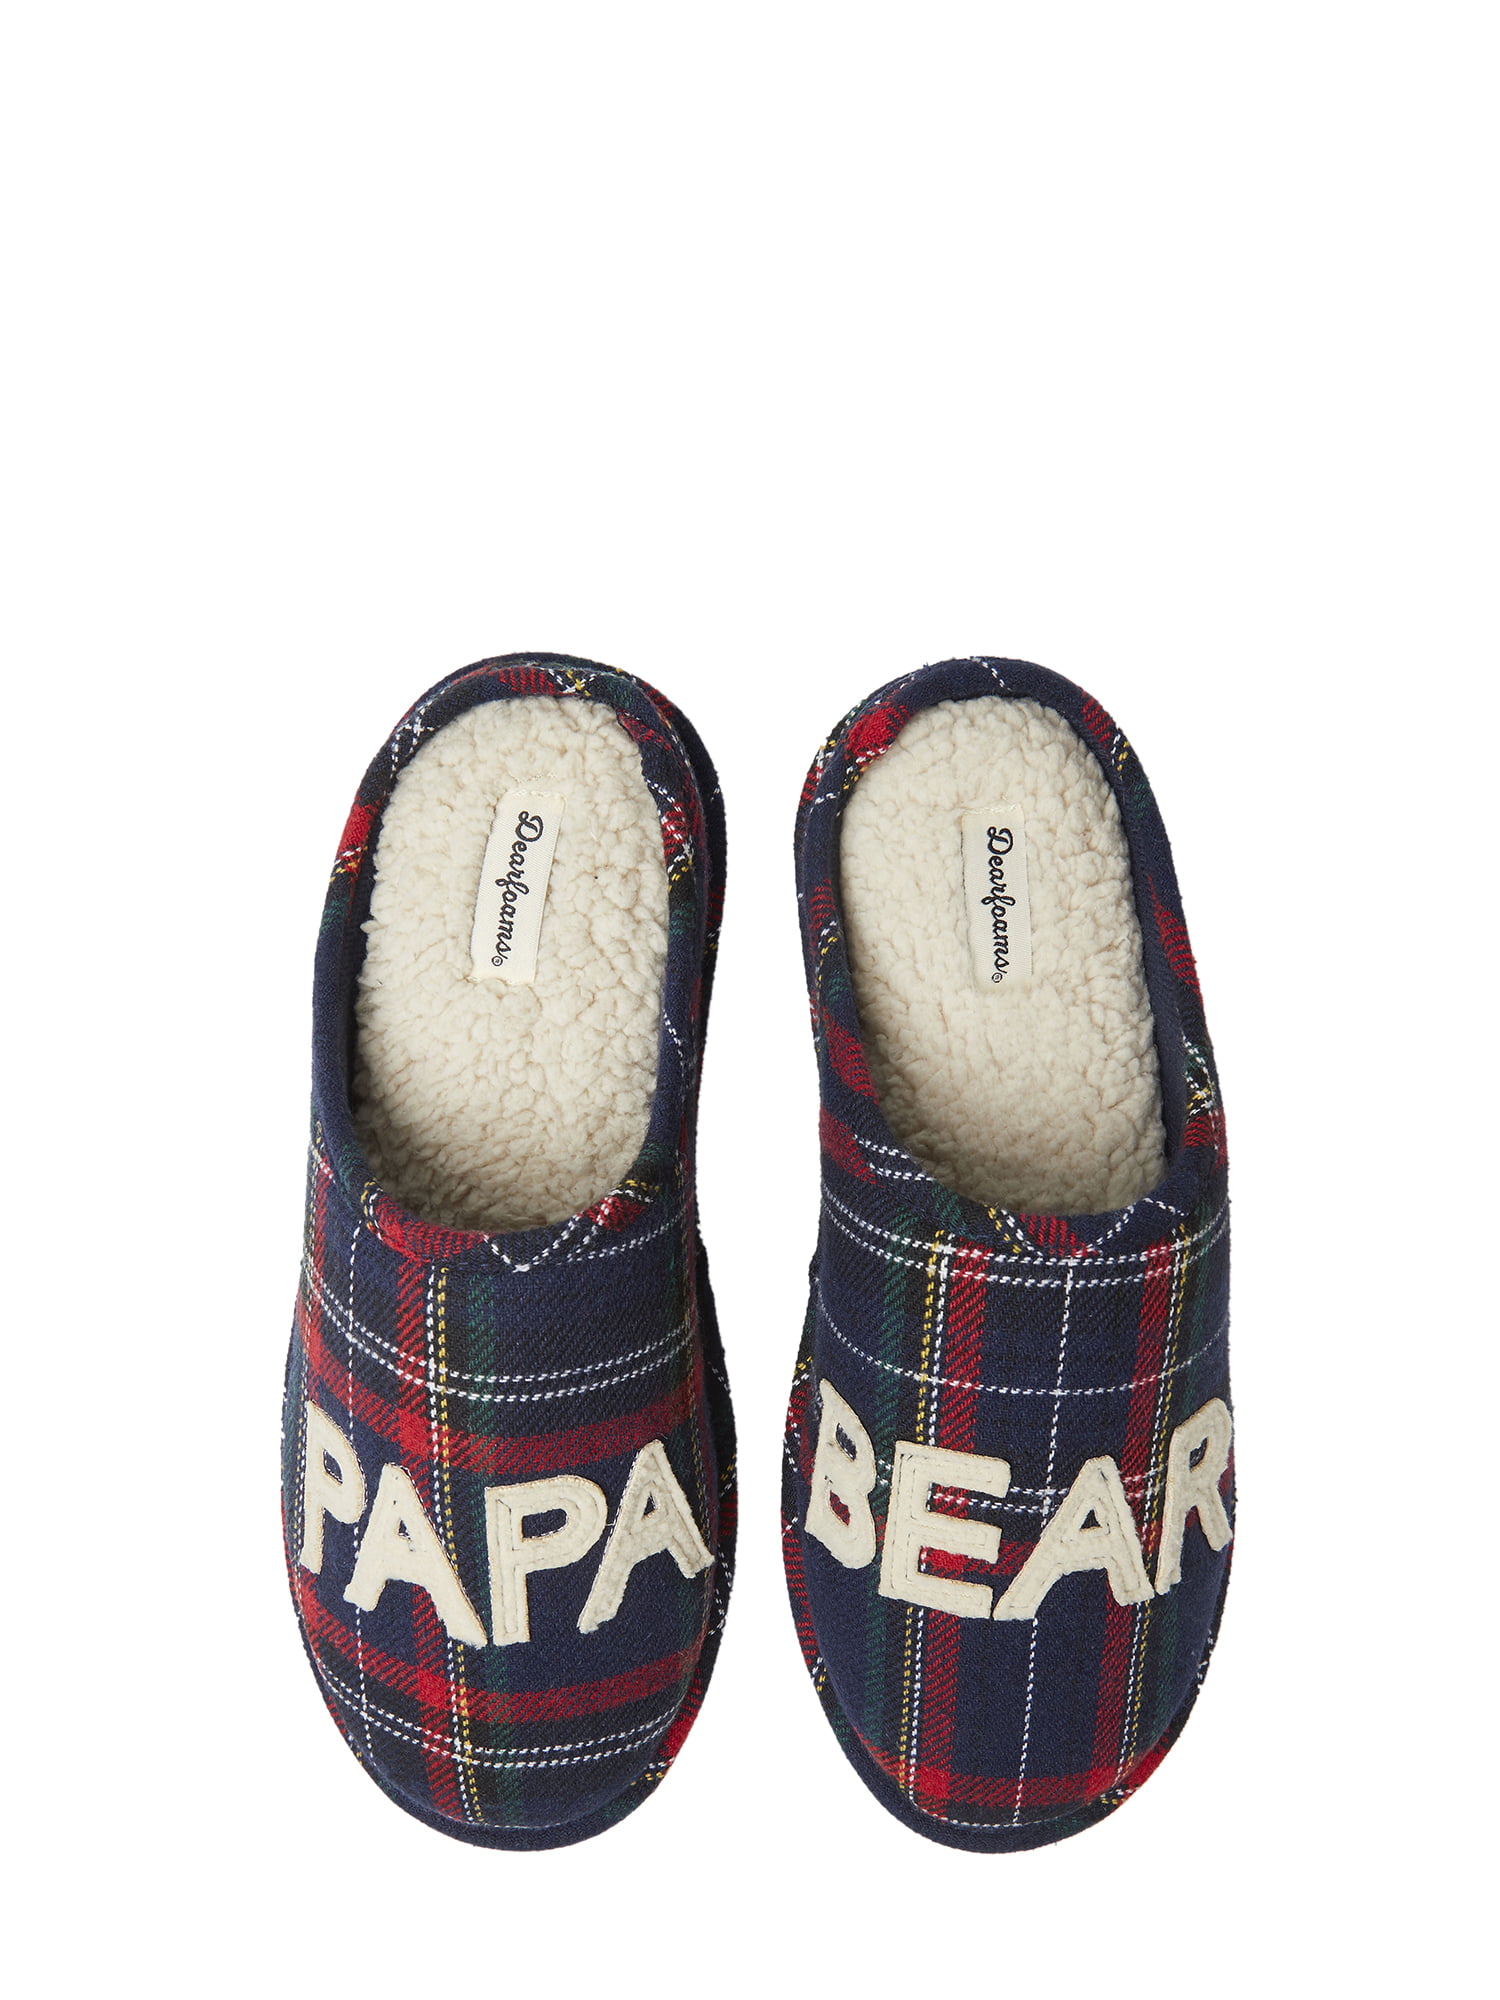 papa bear house slippers